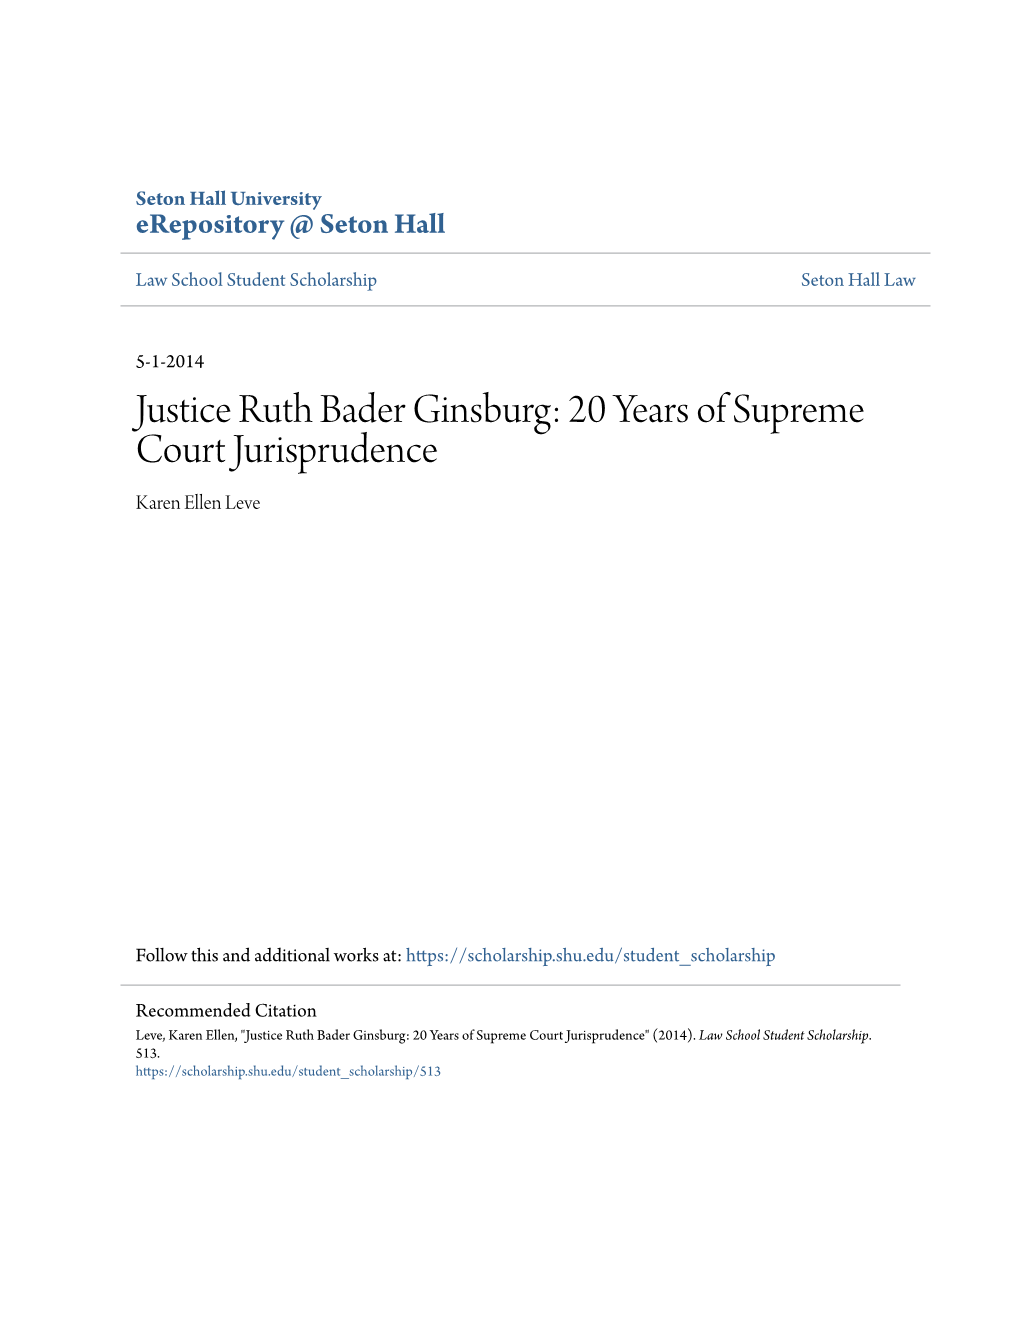 Justice Ruth Bader Ginsburg: 20 Years of Supreme Court Jurisprudence Karen Ellen Leve